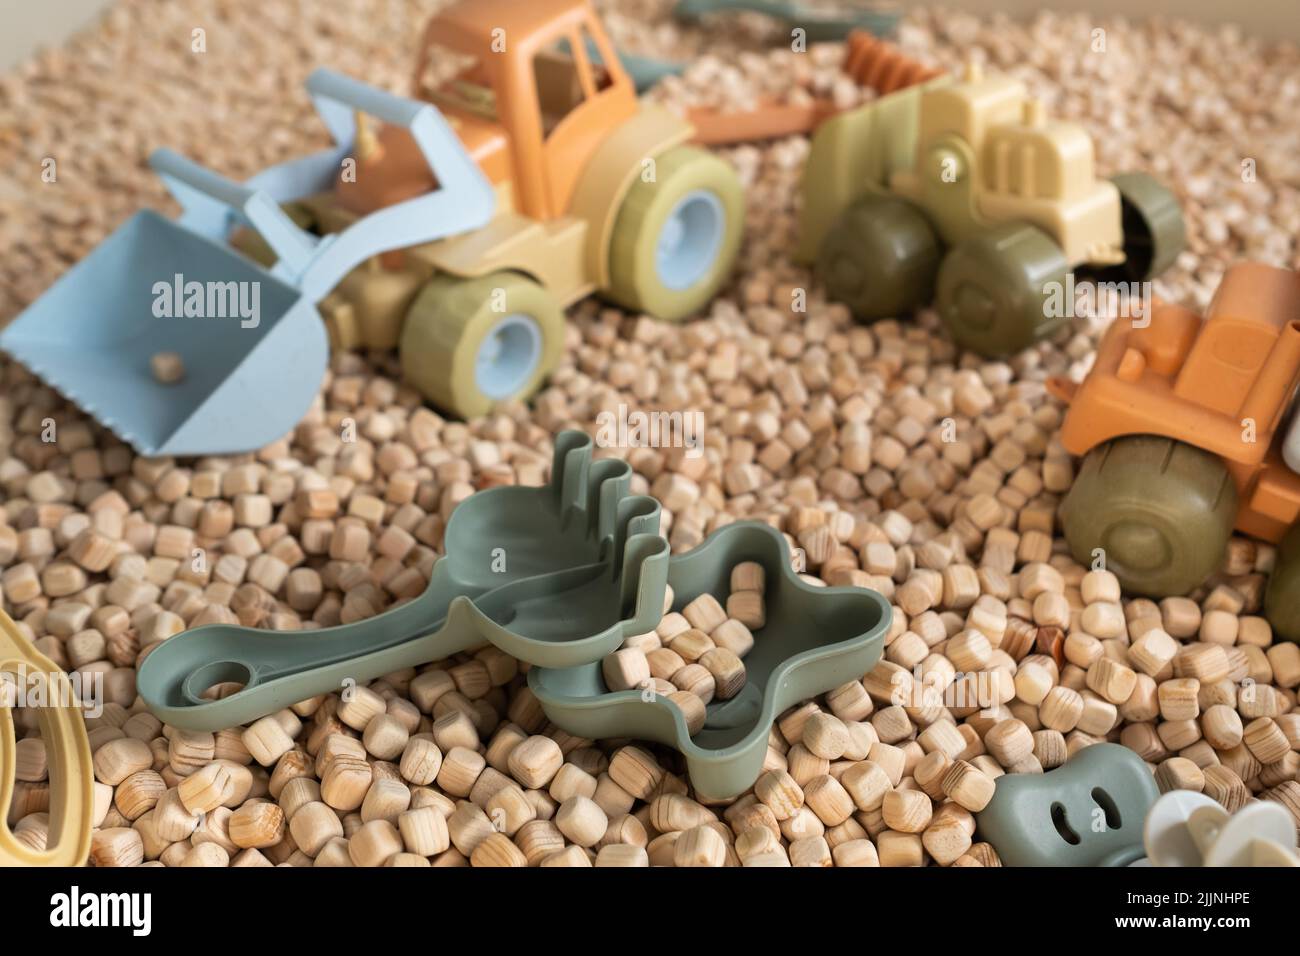 small toys plastic items Stock Photo - Alamy